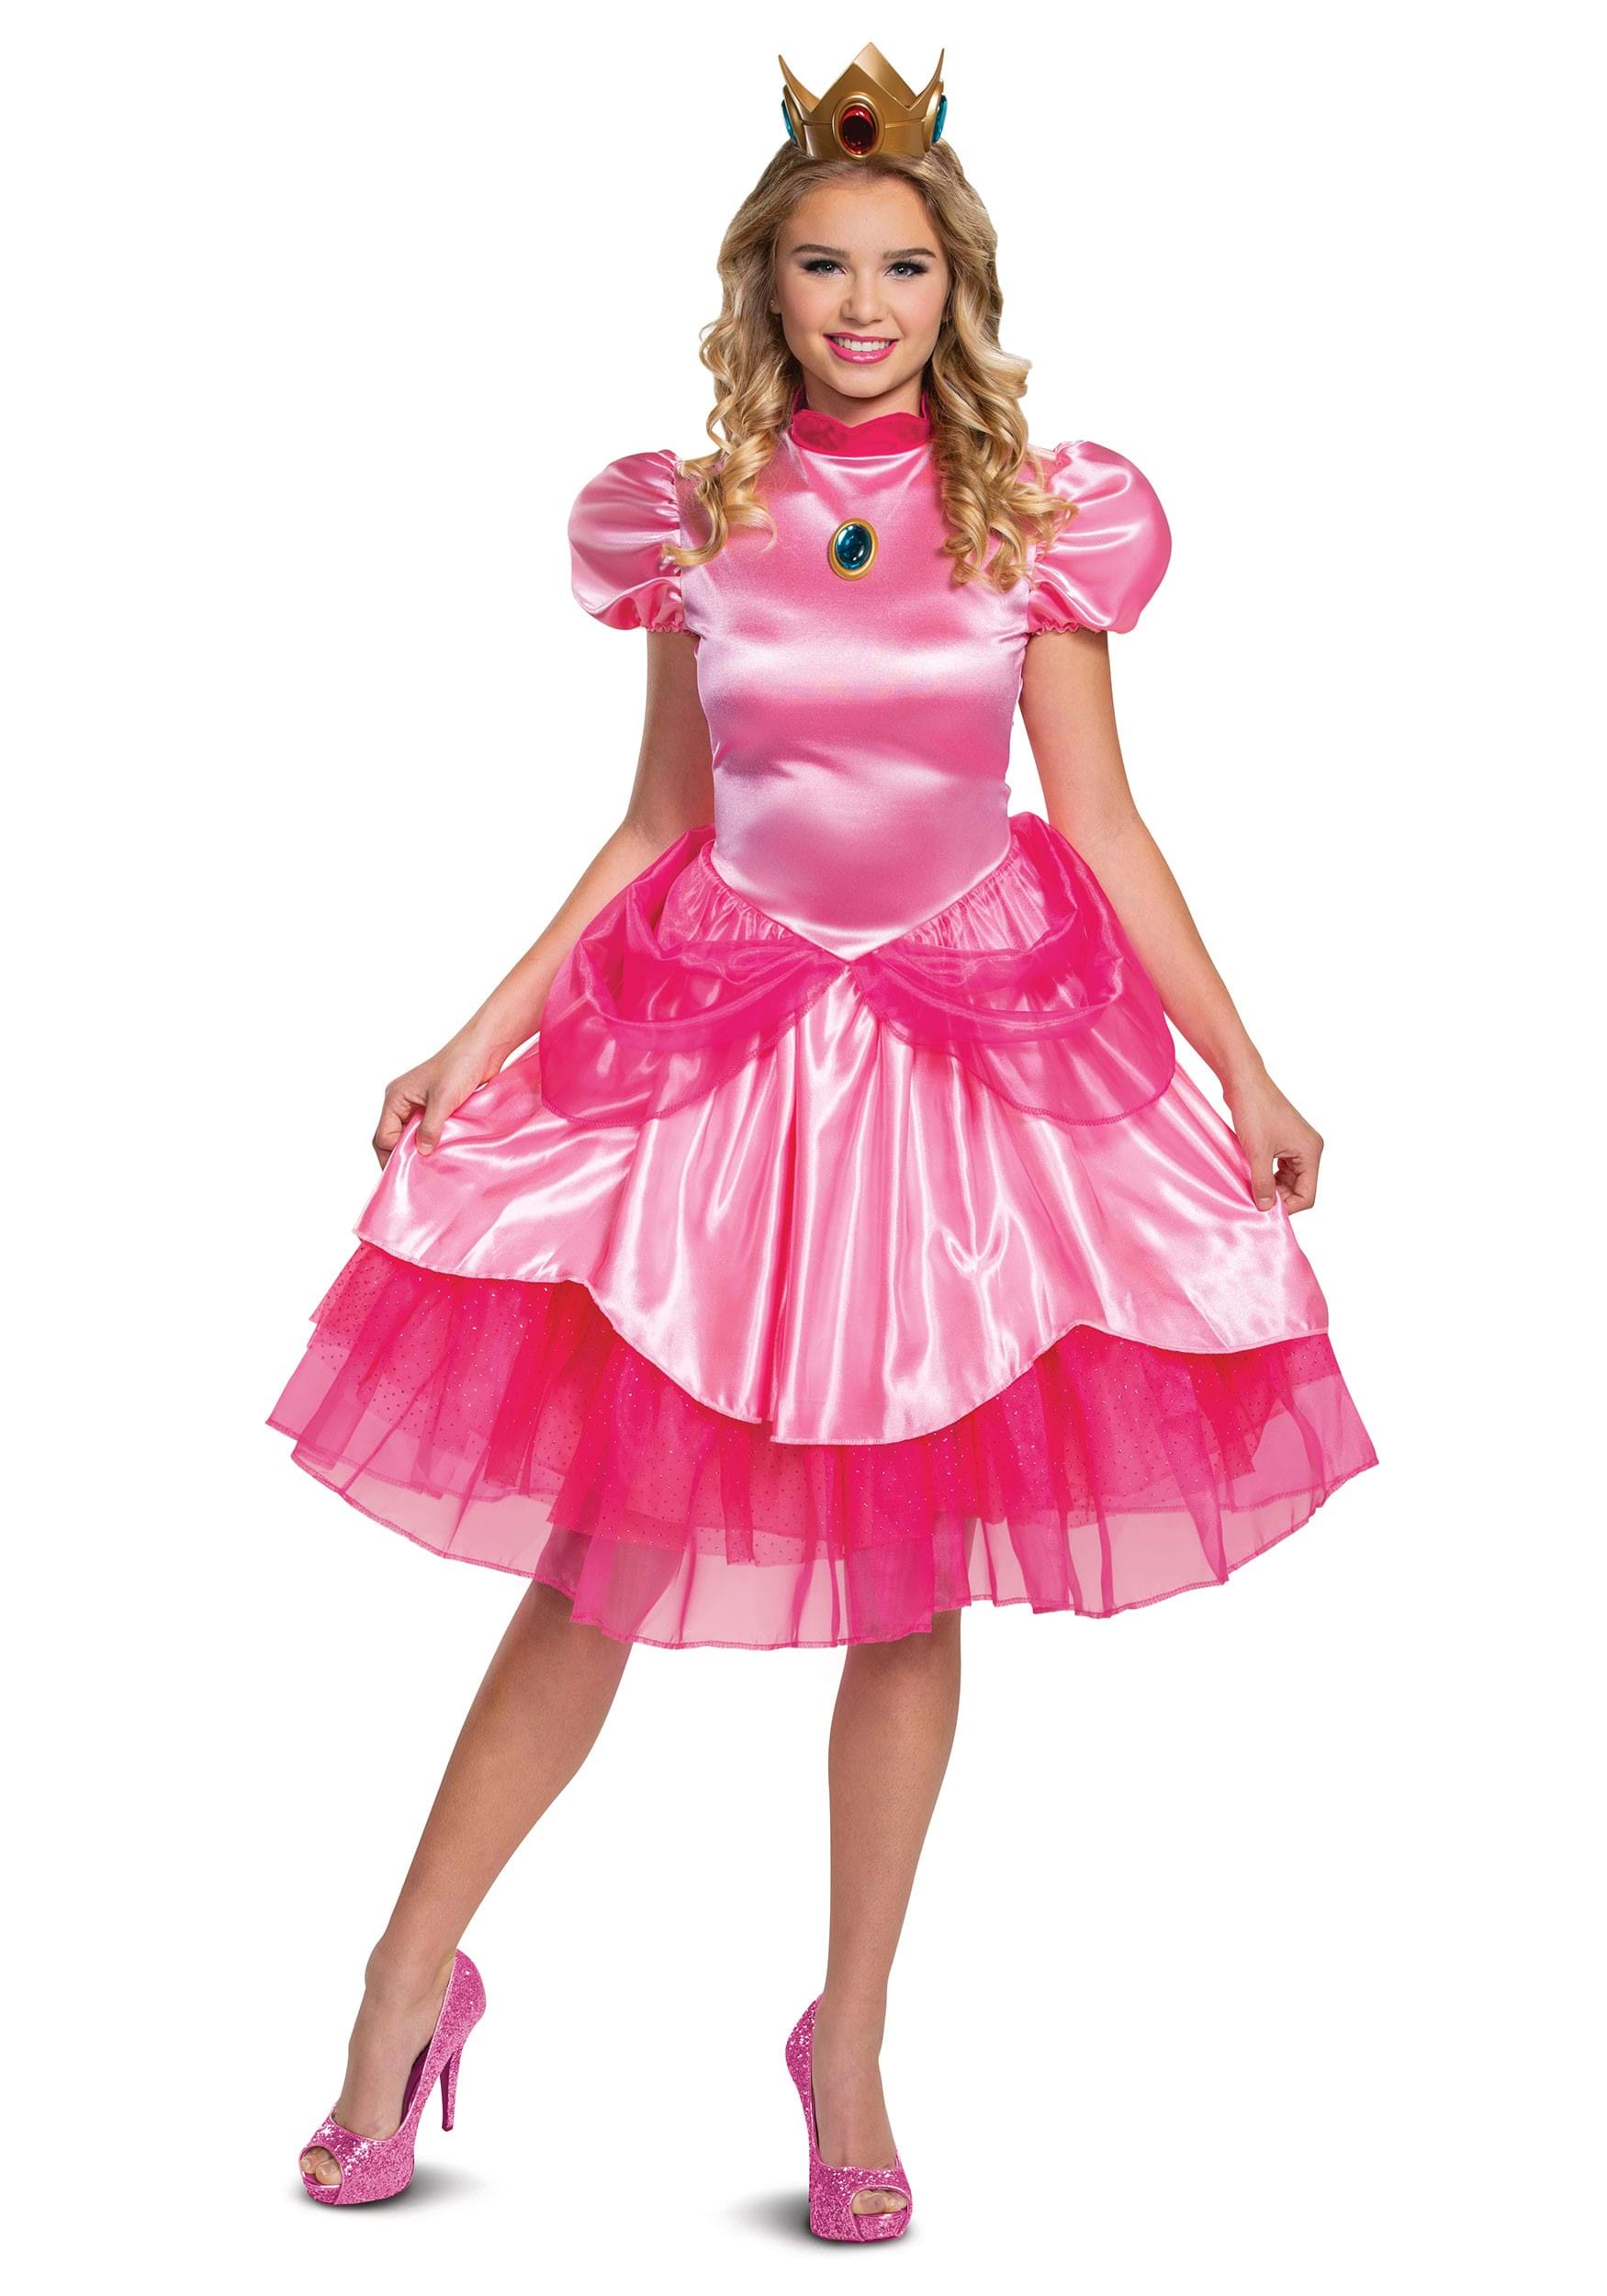 Photos - Fancy Dress Deluxe Disguise  Super Mario Princess Peach Womens Costume Pink DI10693 